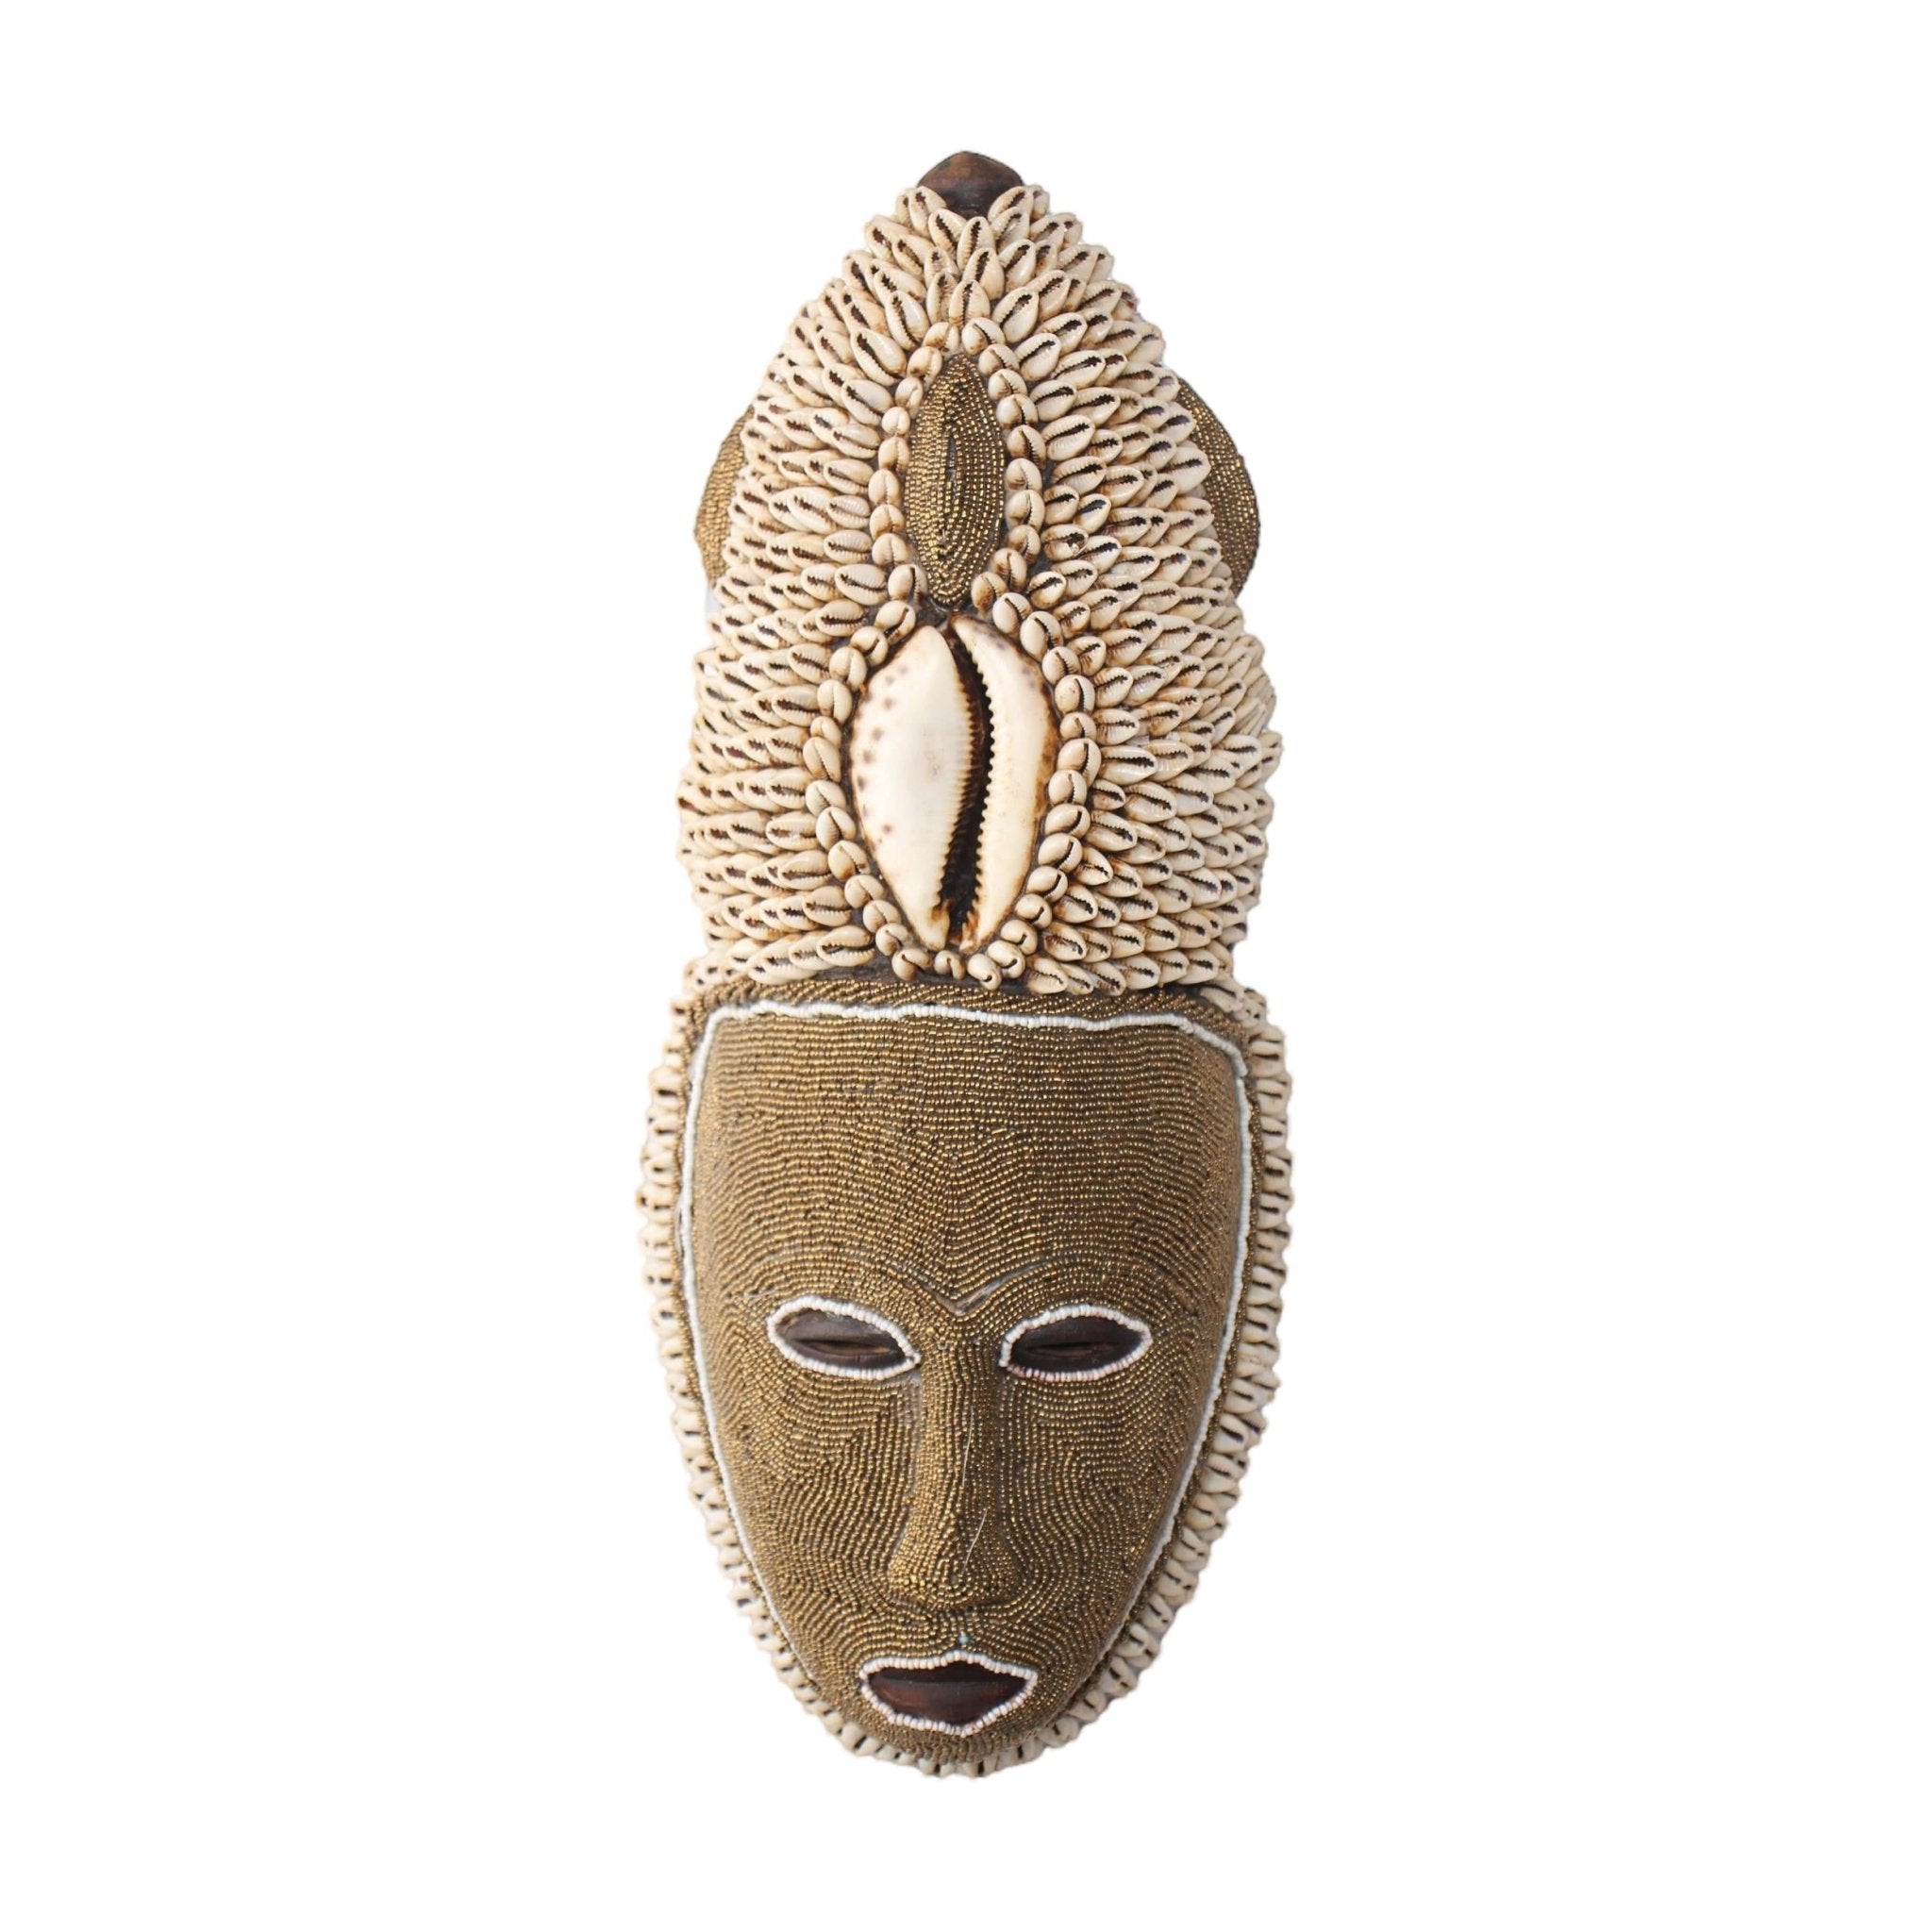 Baule Tribe Mask ~17.7" Tall - African Angel Art - Mask